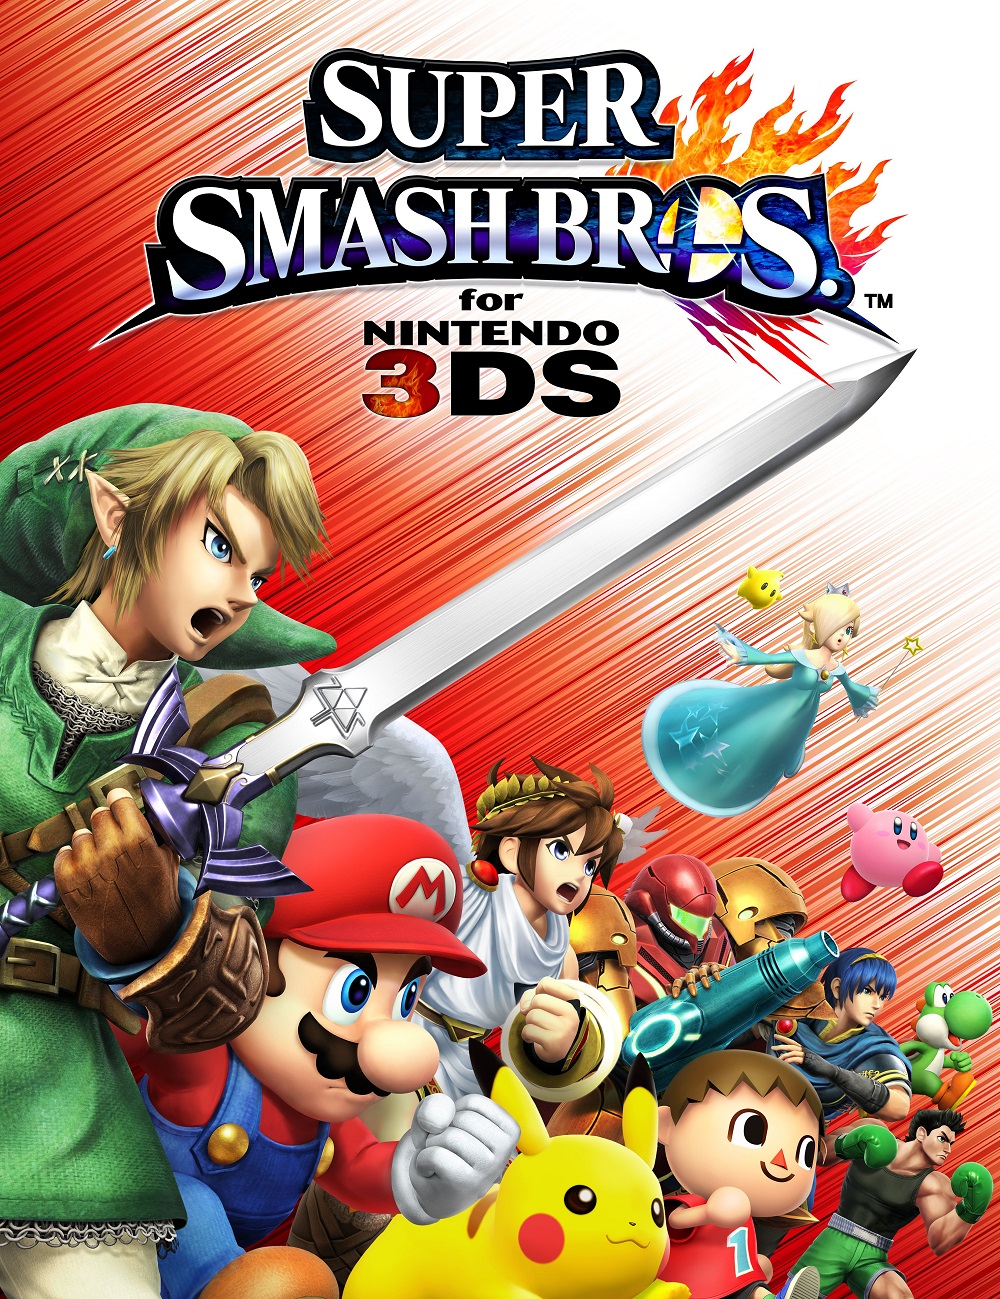 Super Smash Bros. for 3DS